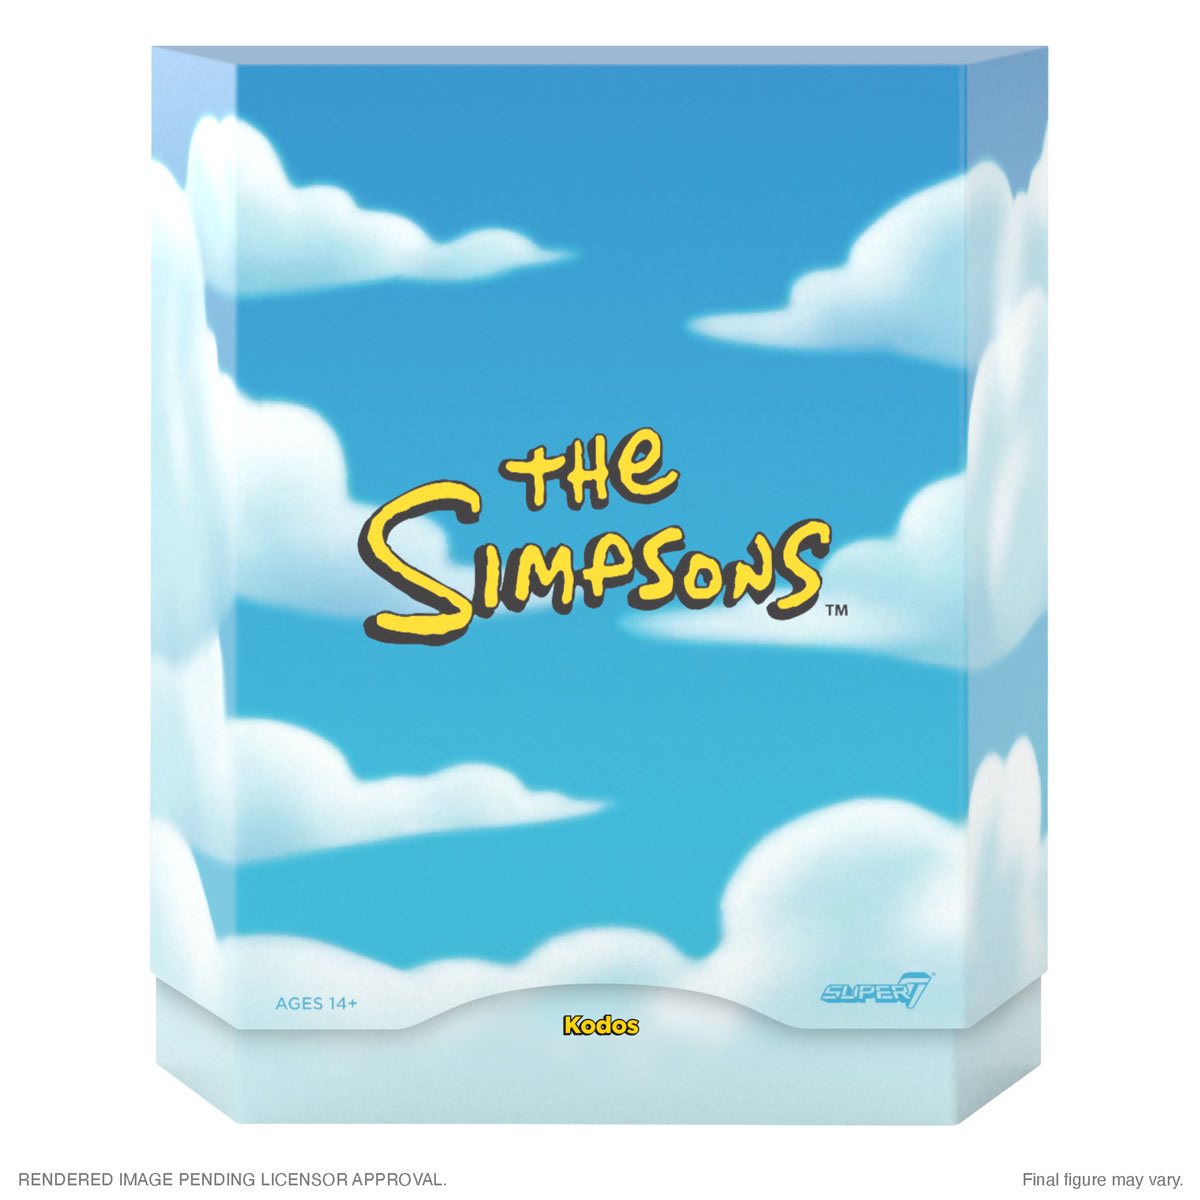 Super7 Ultimates: The Simpsons - Kodos